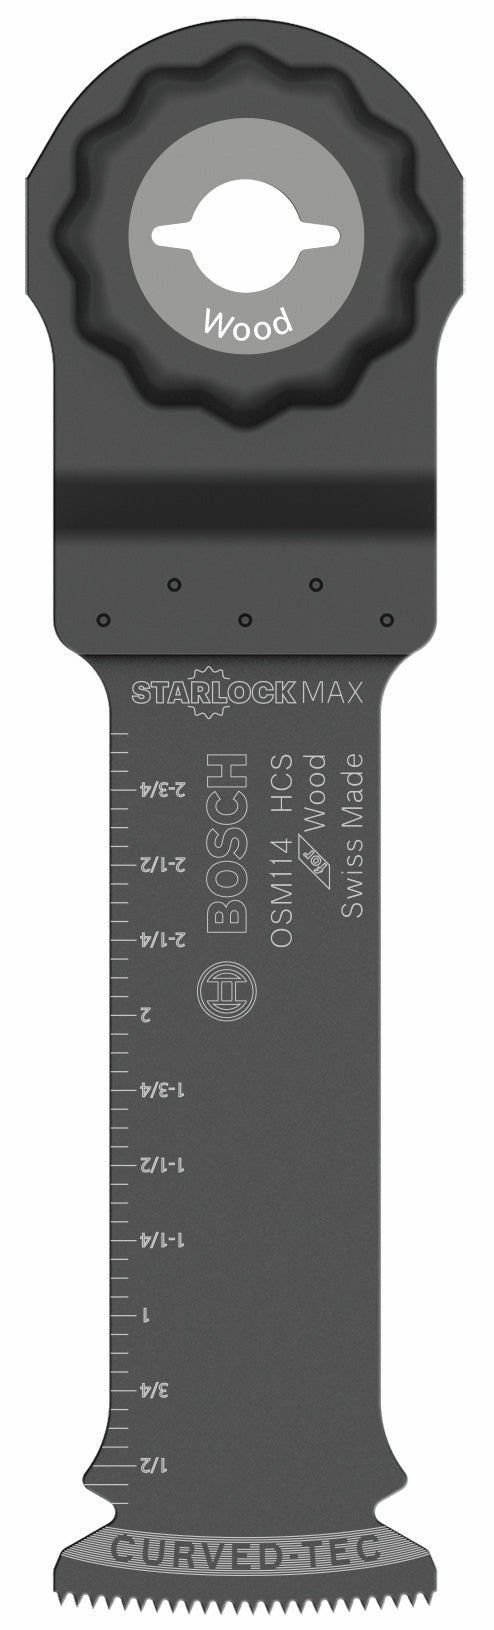 BOSCH 1-1/4" StarlockMax® Oscillating Multi Tool High-Carbon Steel Plunge Cut Blade